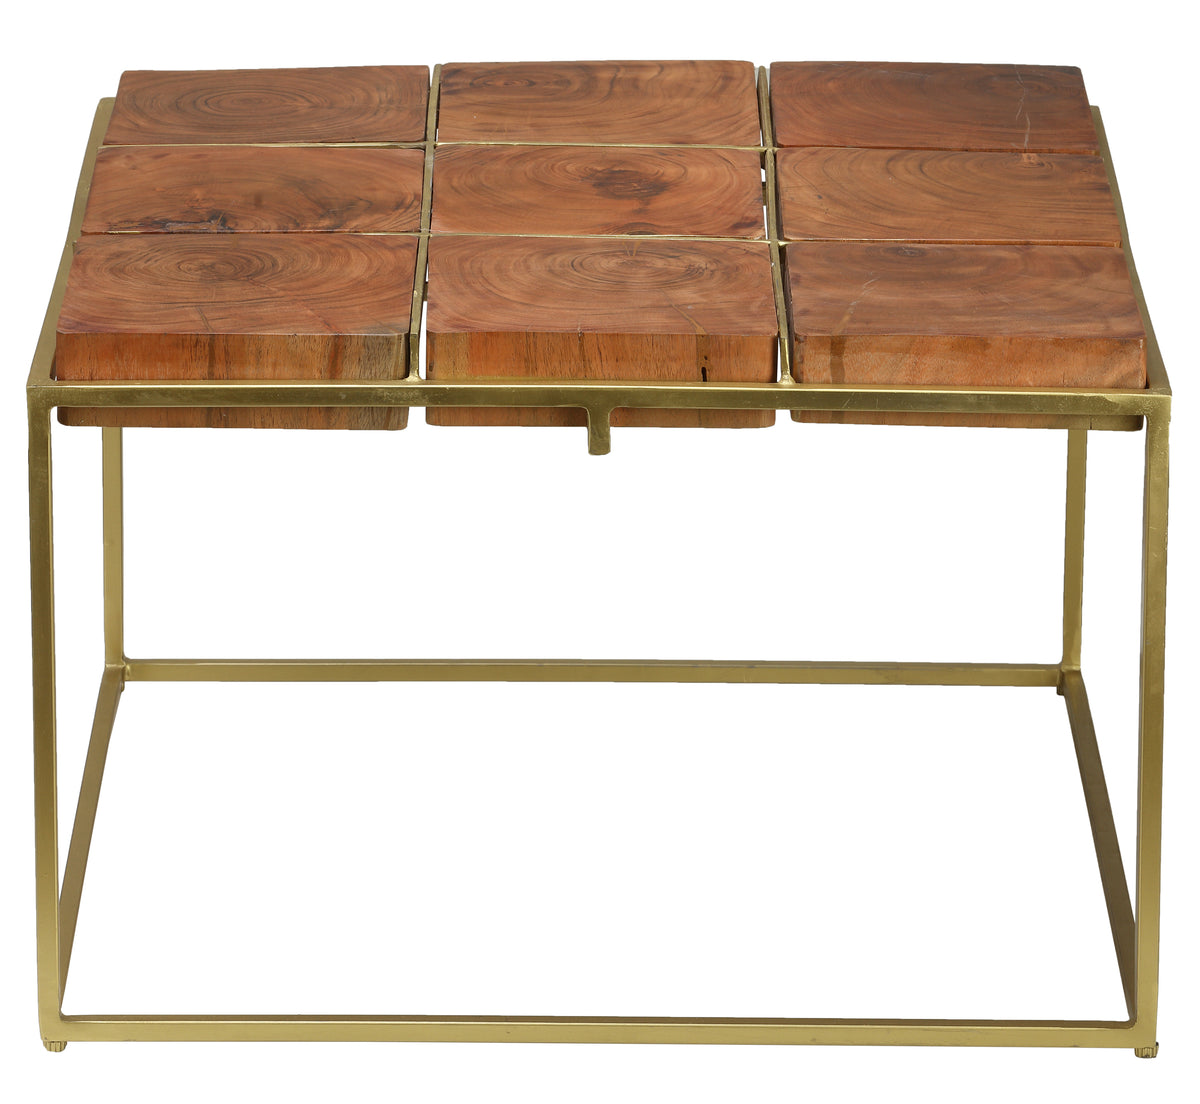 Bare Decor Cheyenne Metal and Wood Coffee Table